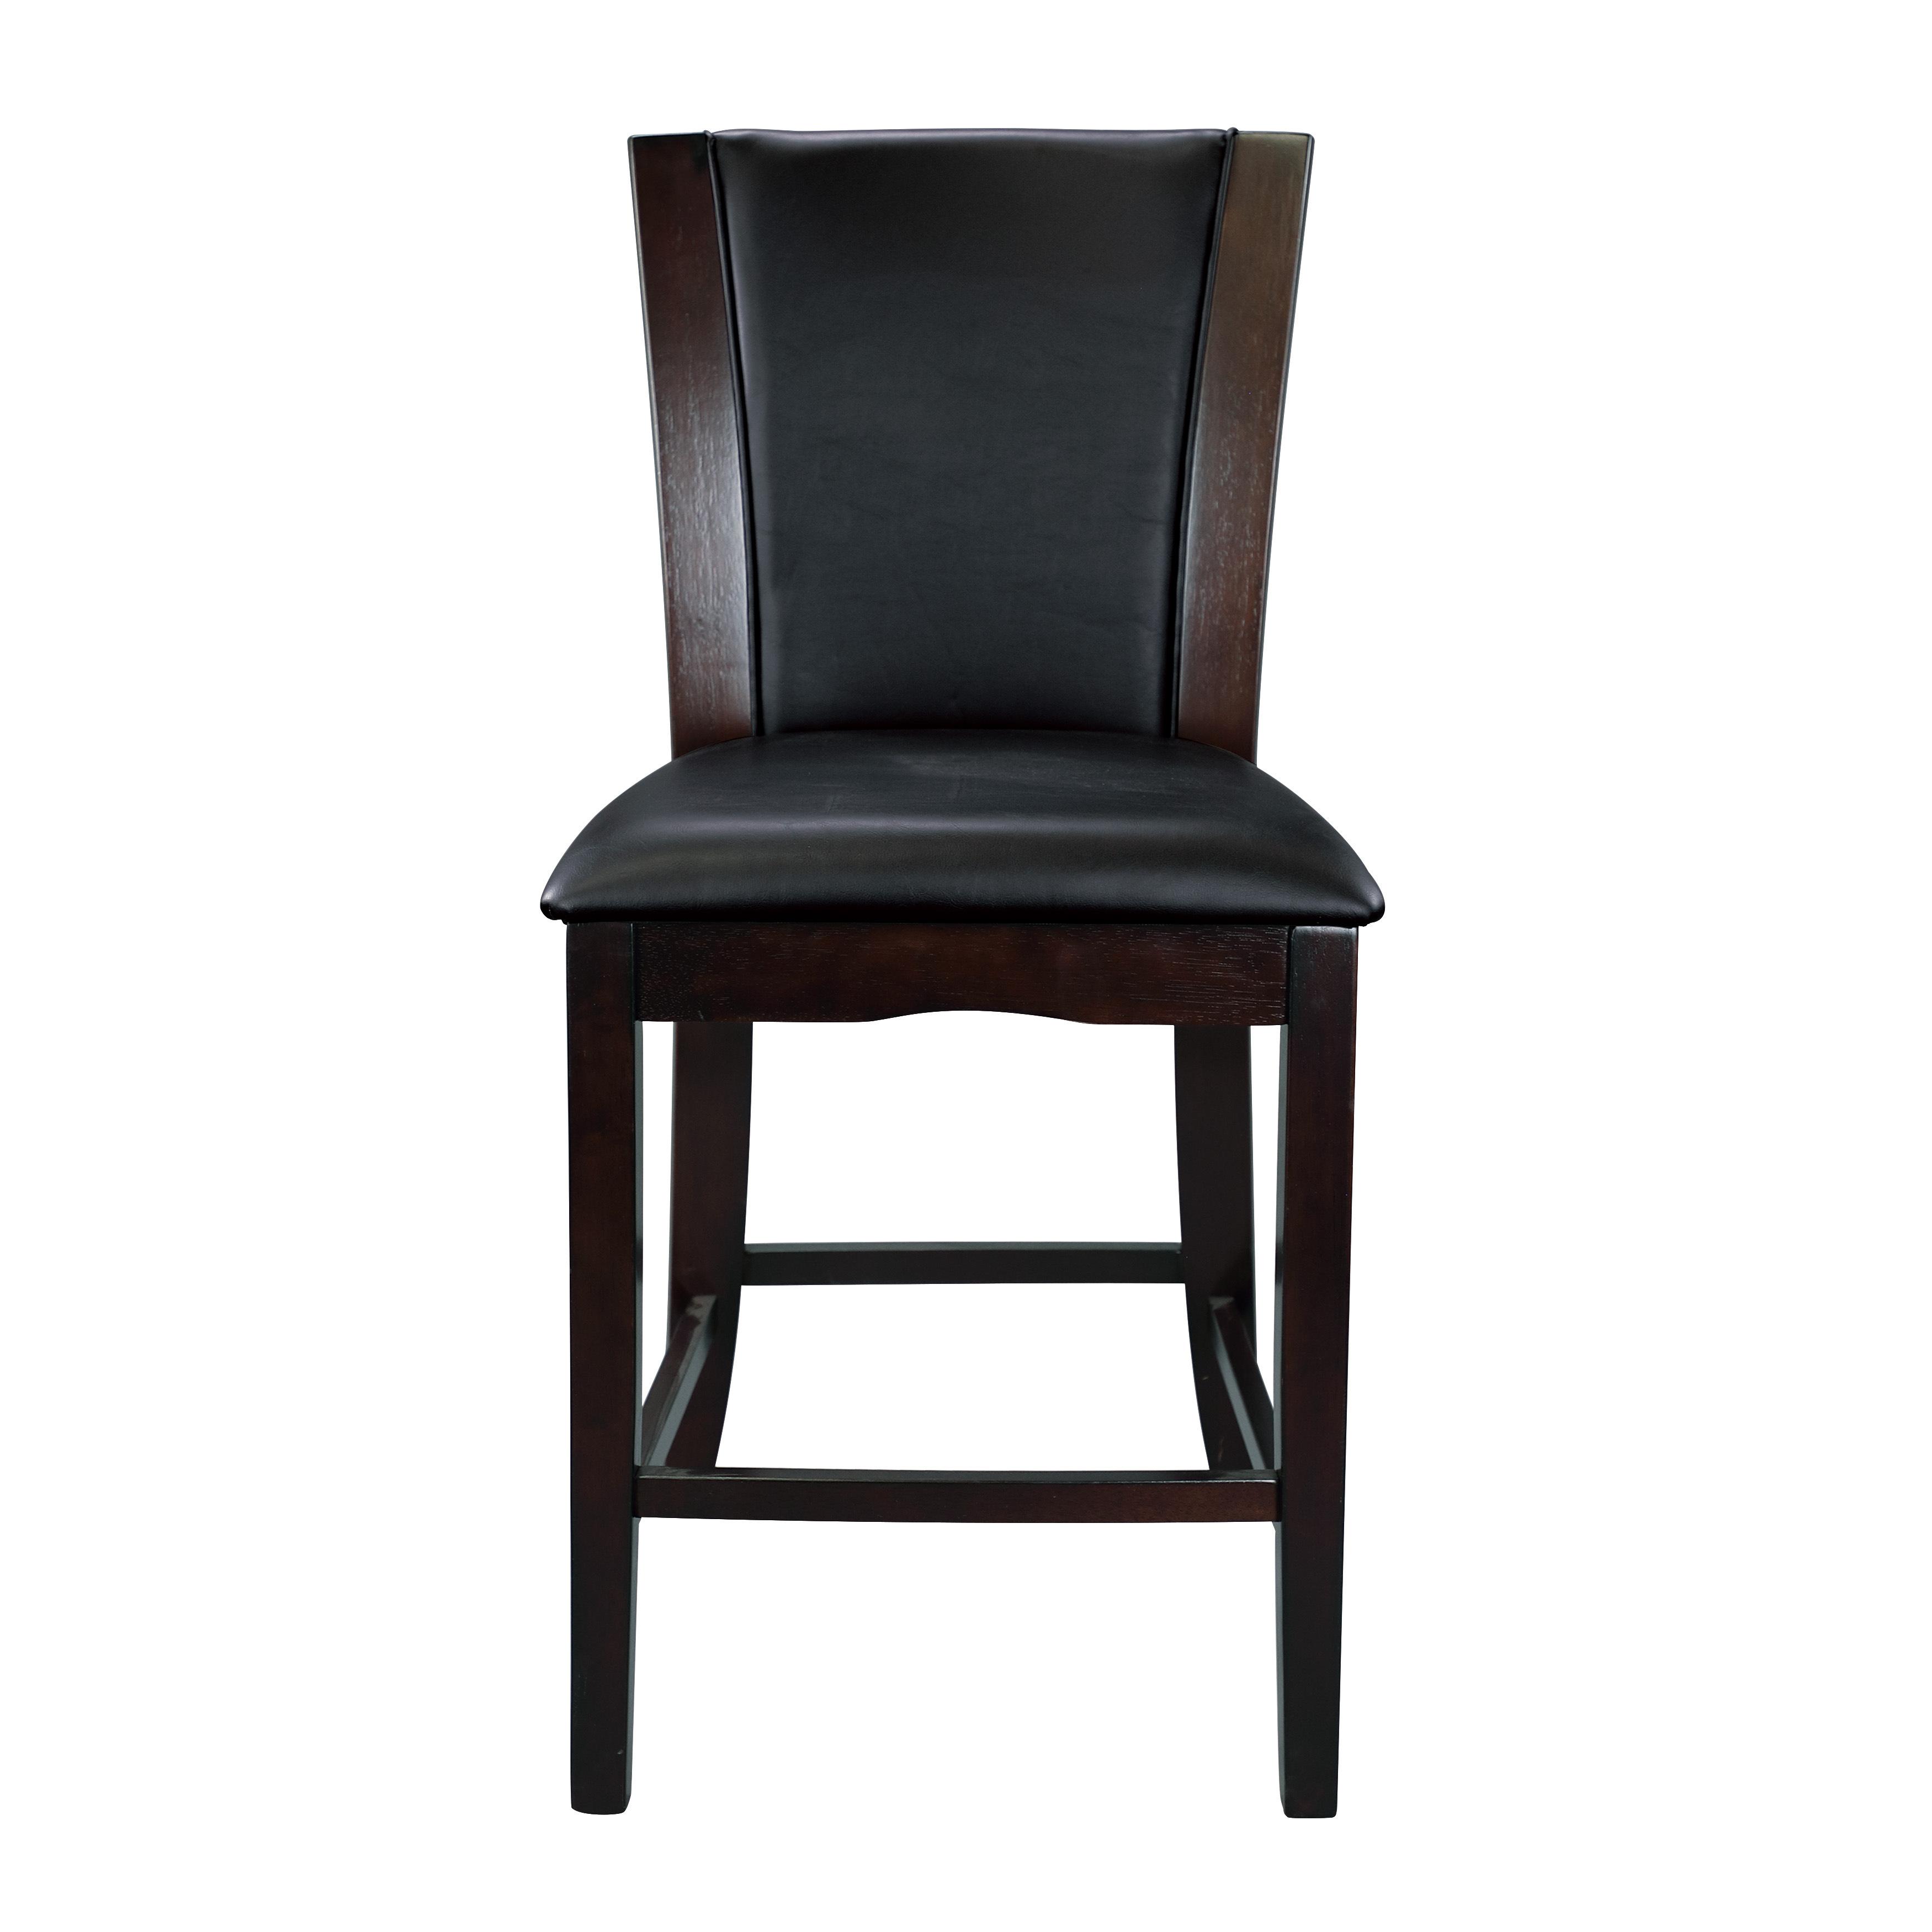 Homelegance 710-24 Daisy Counter Height Chair